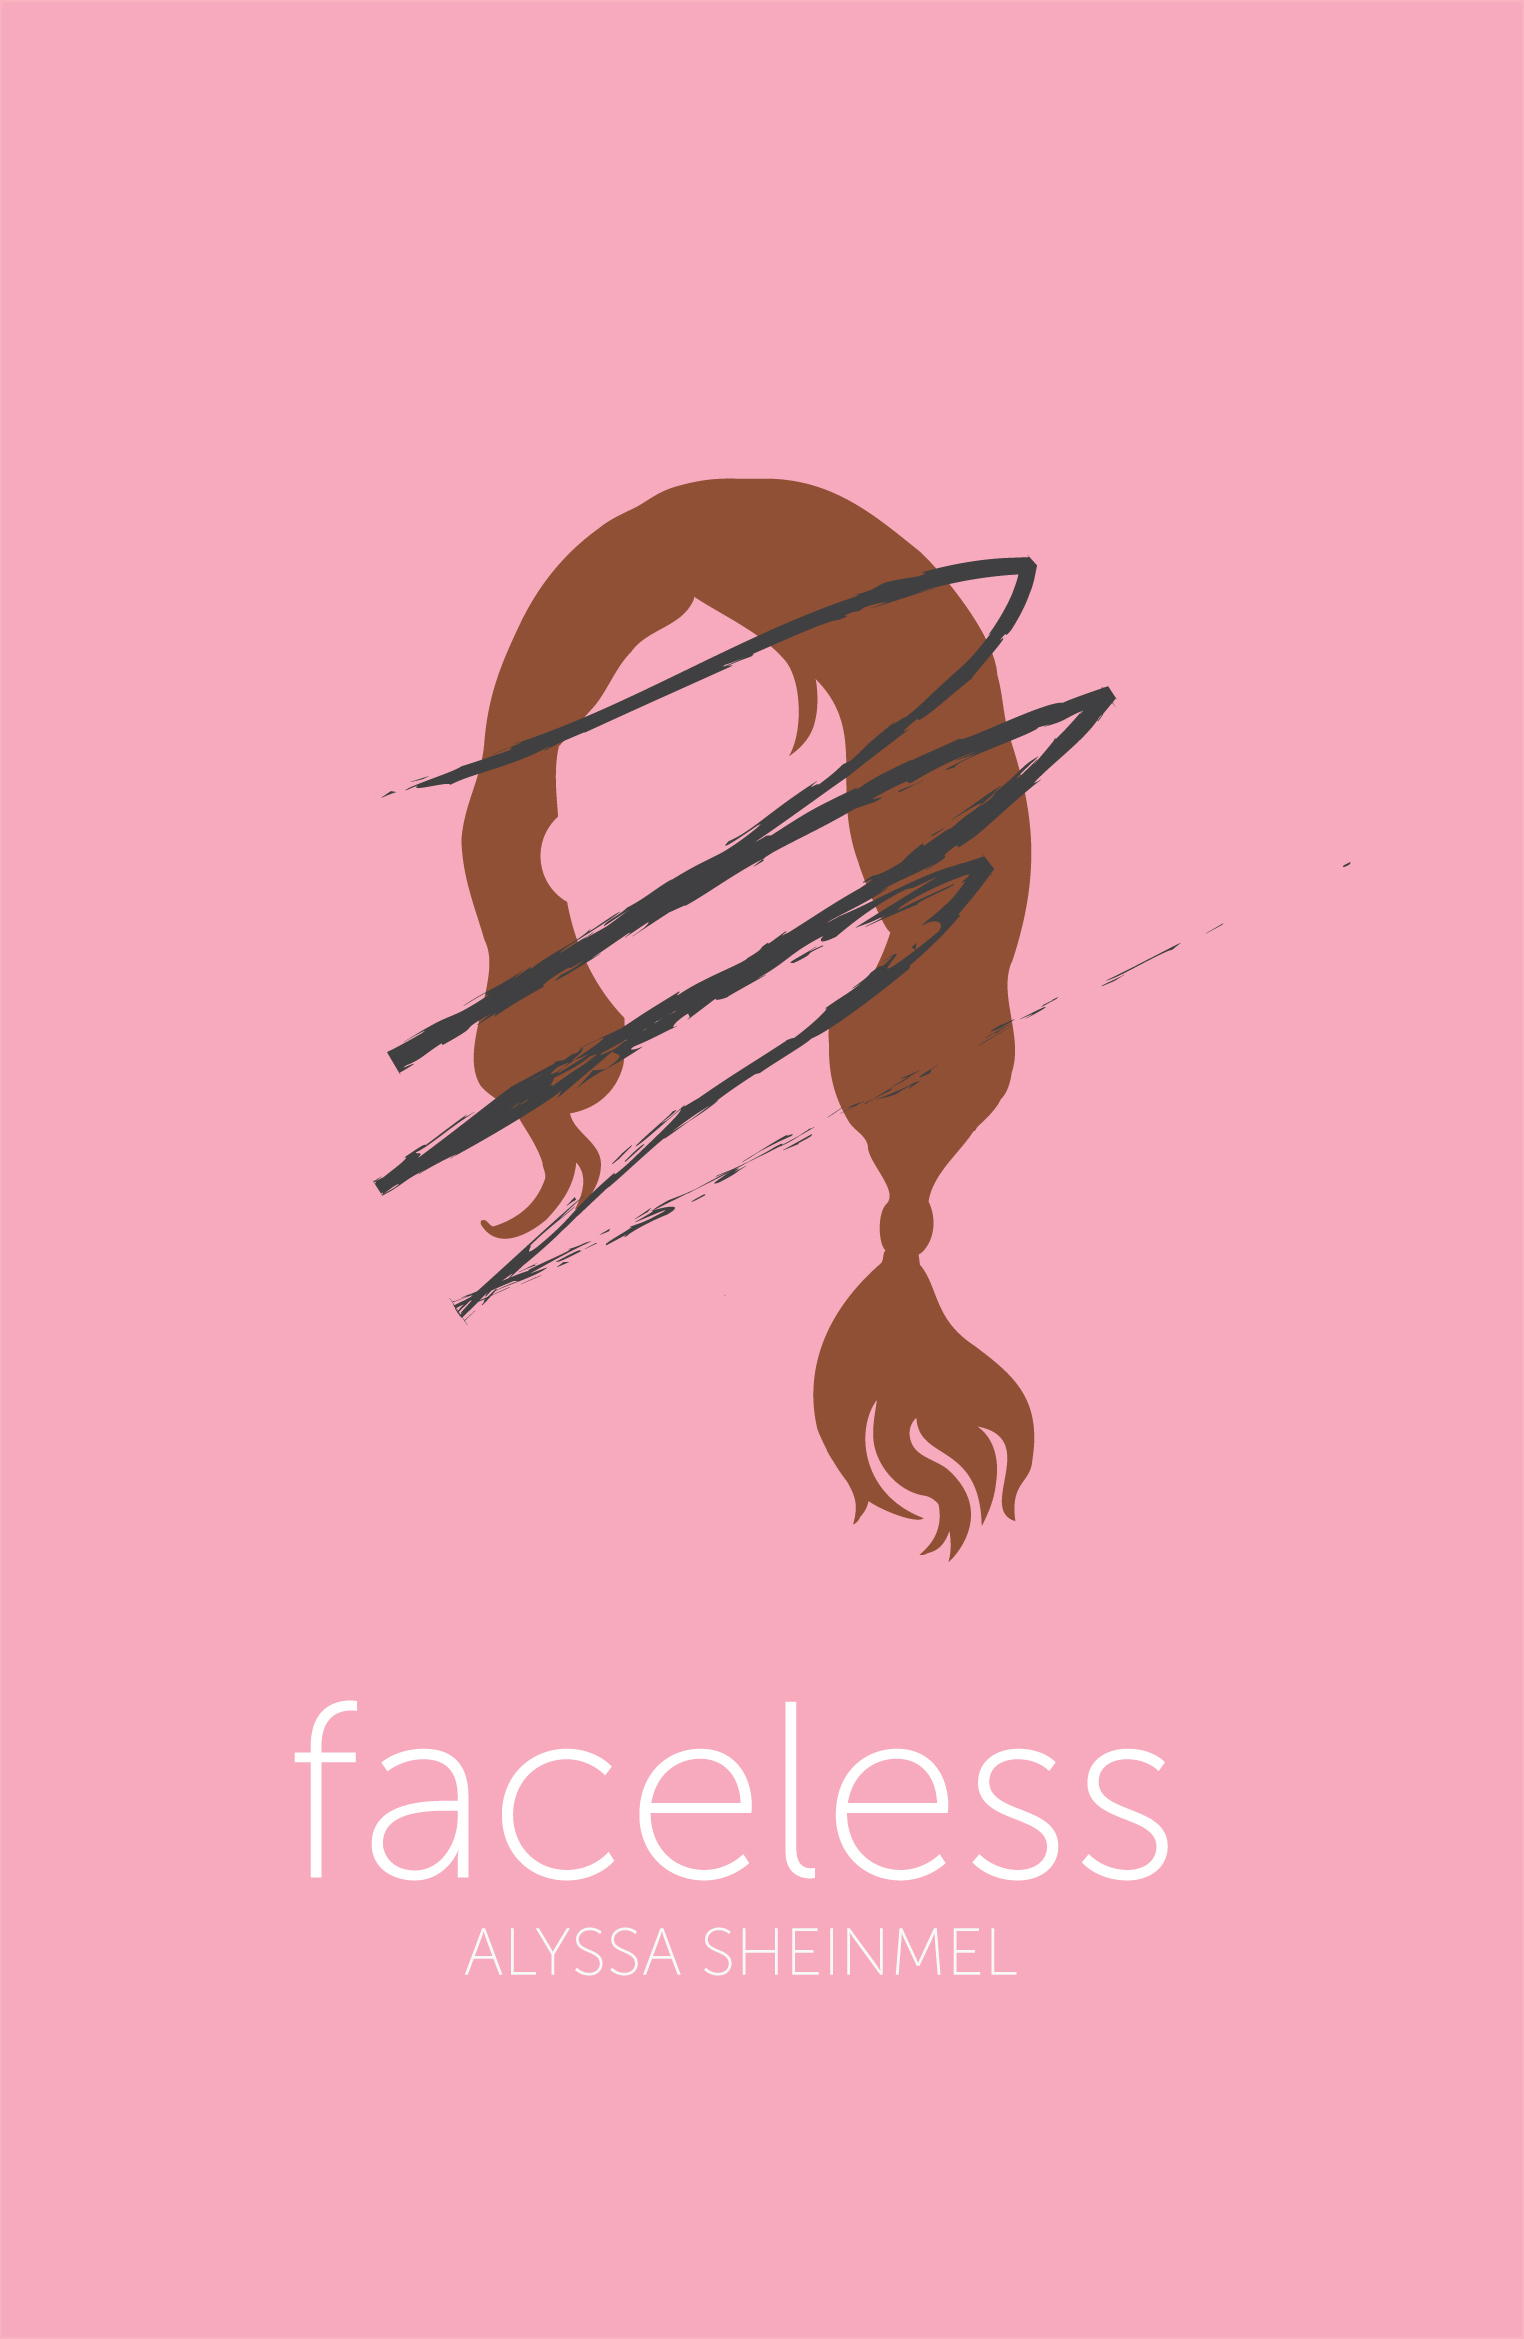 Faceless by Alyssa Shienmel